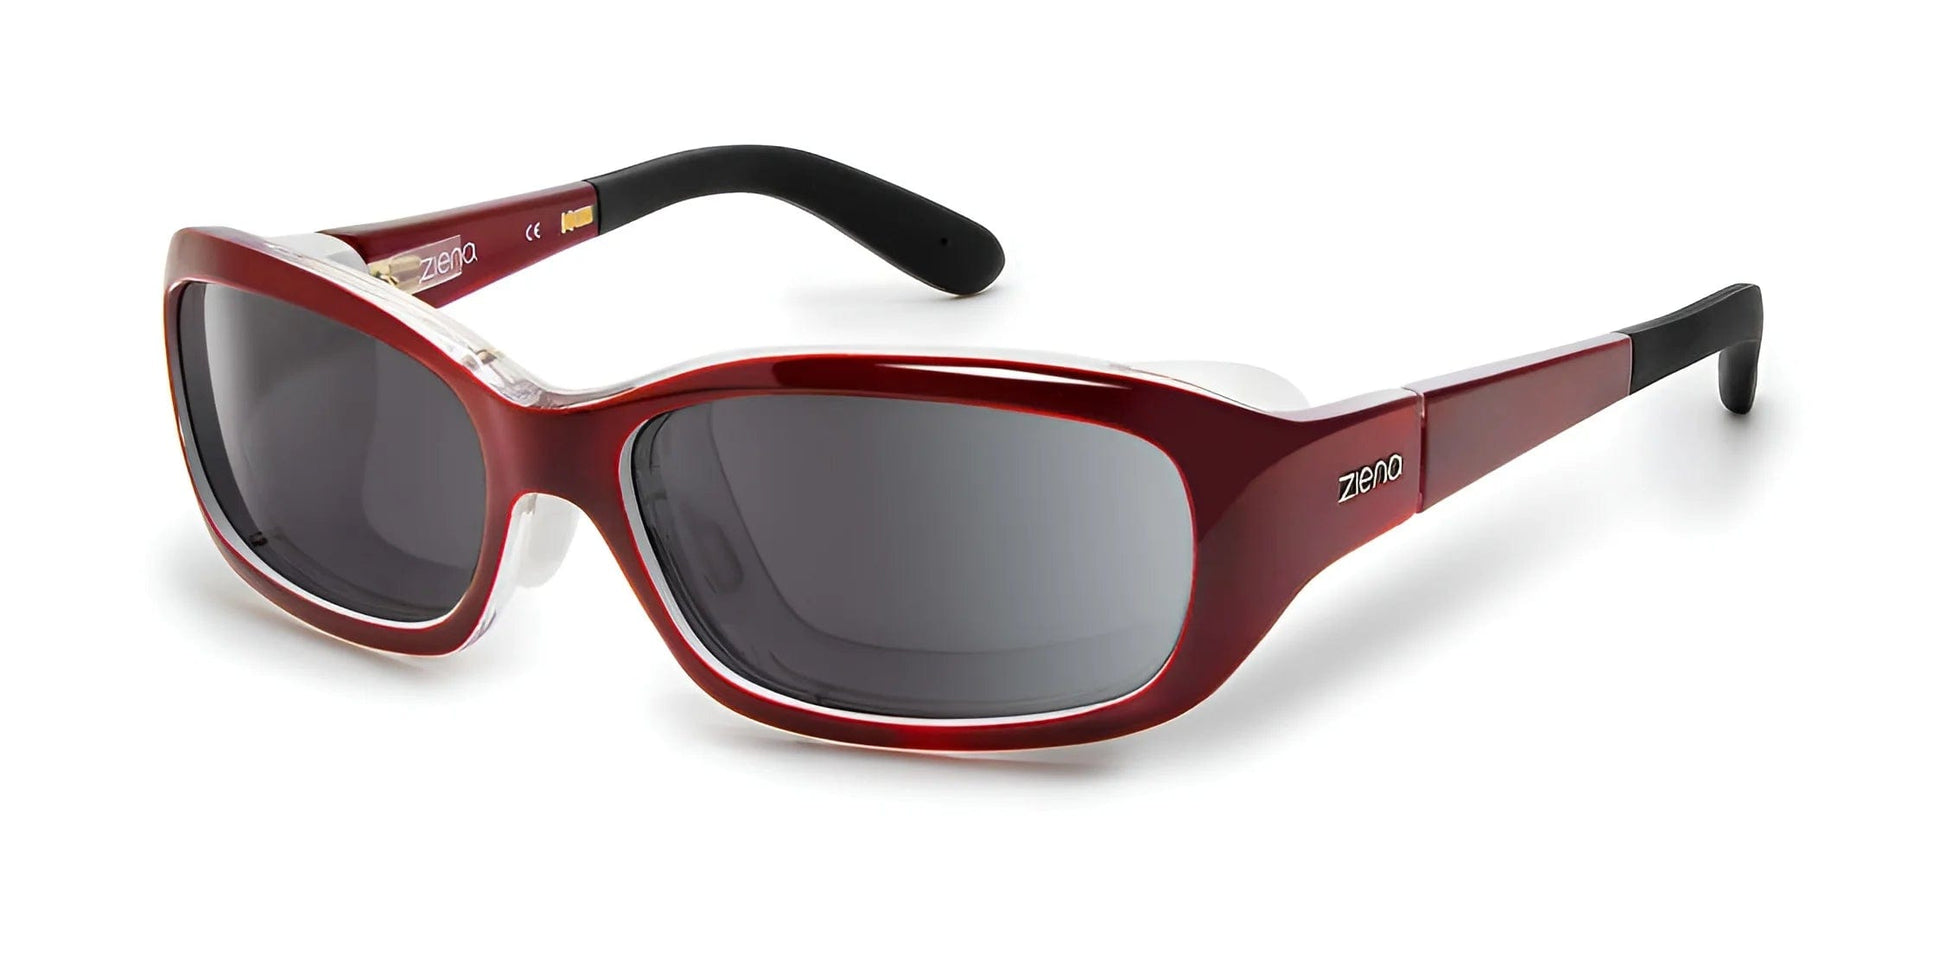 Ziena Verona Sunglasses Rose / DARKshift™ Photochromic - Clr to DARK Gray / Frost